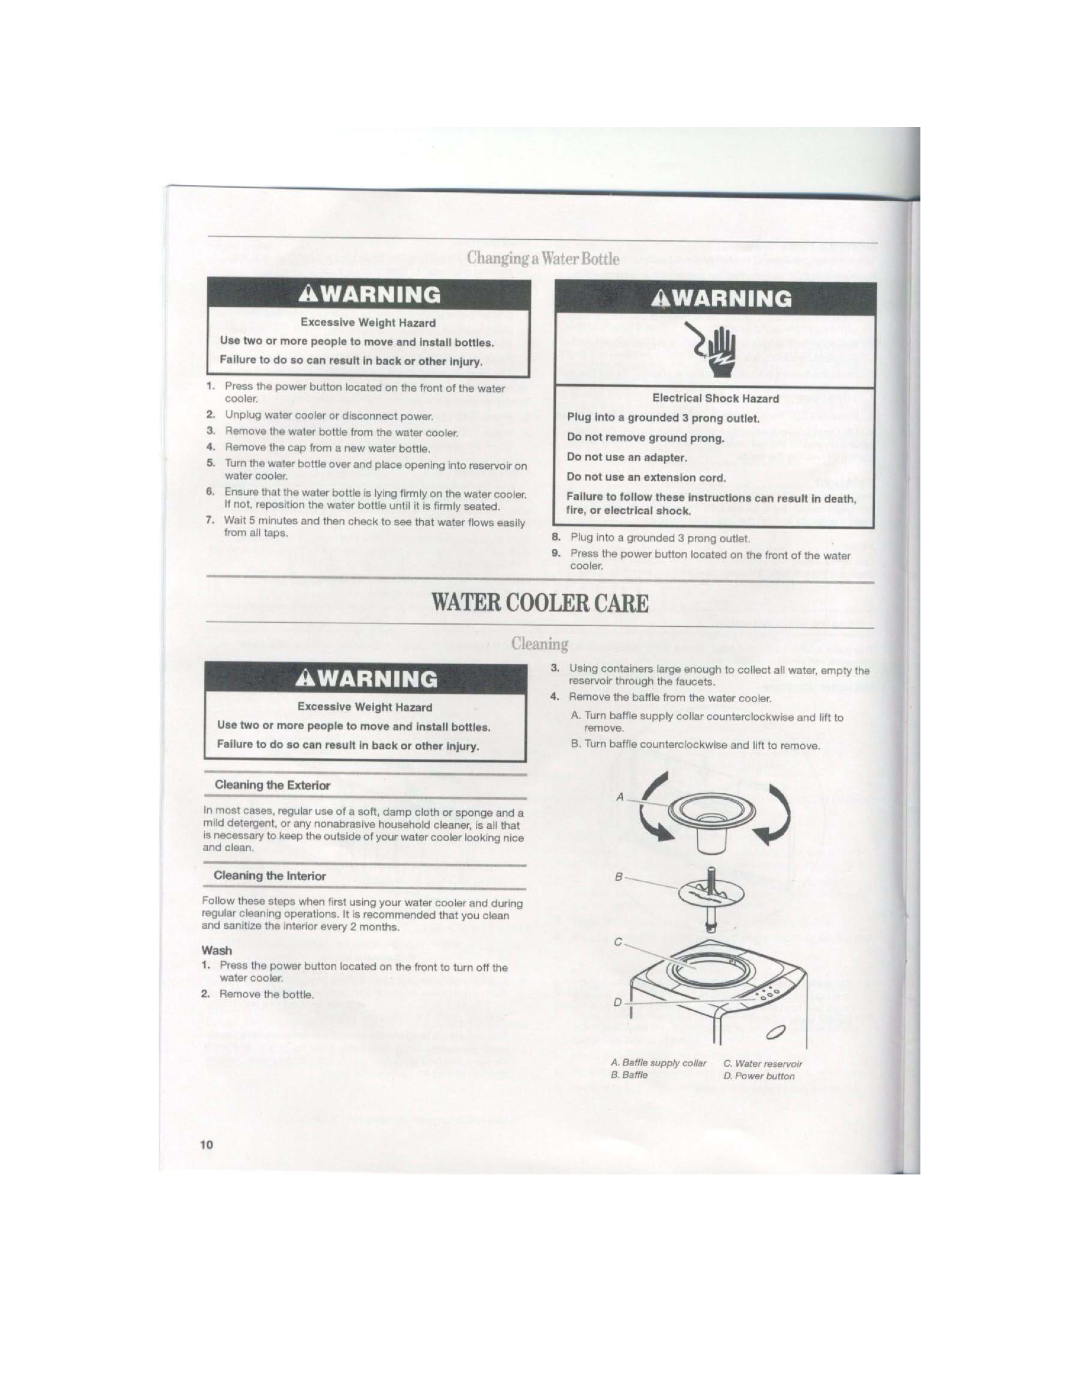 Whirlpool WHKM-D30, WHKM-D20 manual 